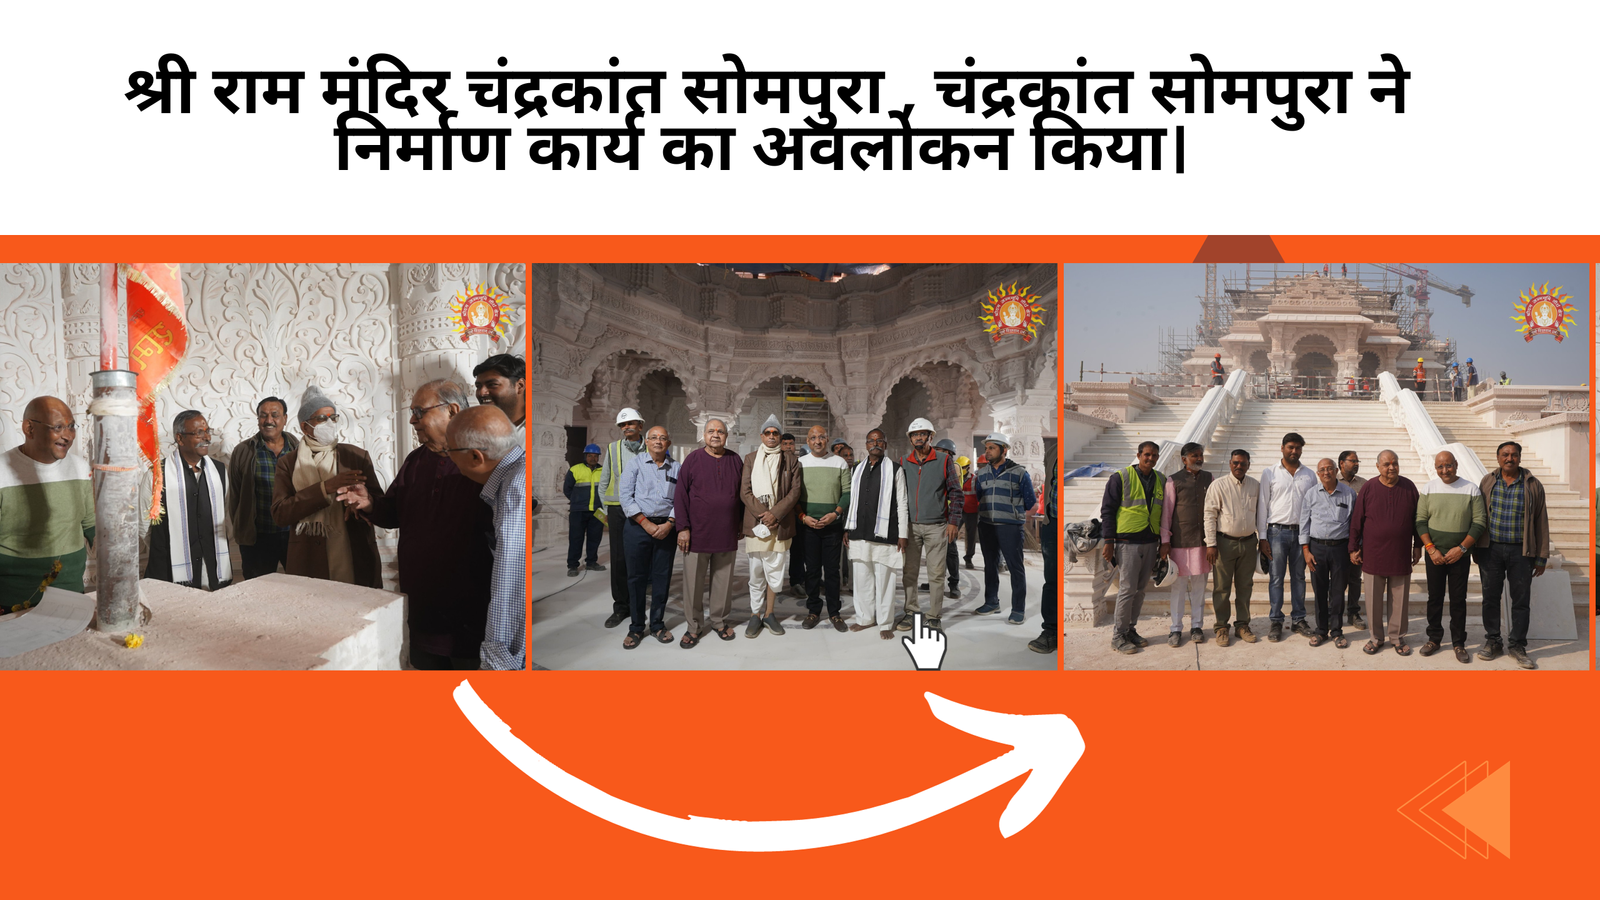 Shri Ram Janmabhoomi Mandir, Chandrakant Sompura, along visited mandir construction site